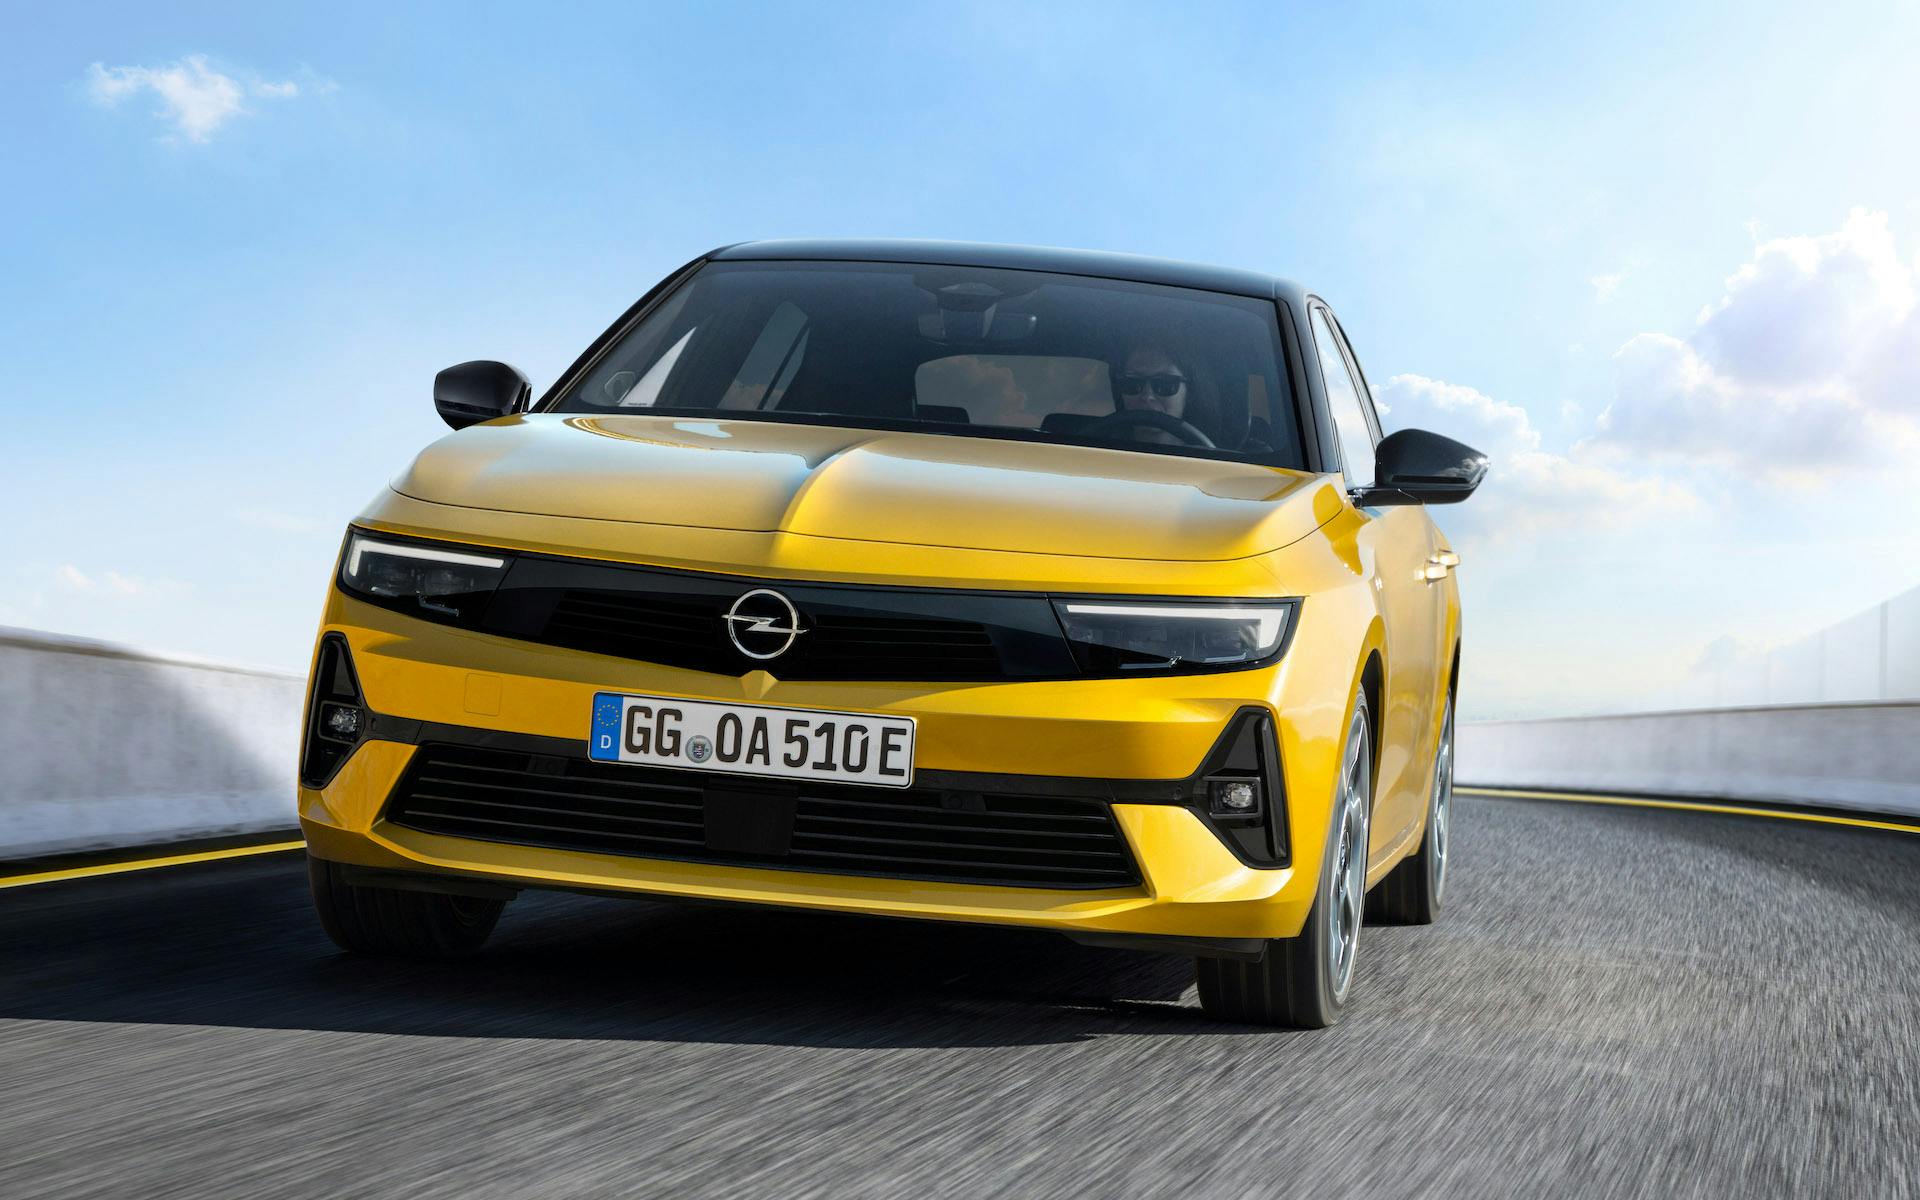 nuova Opel Astra plug-in test